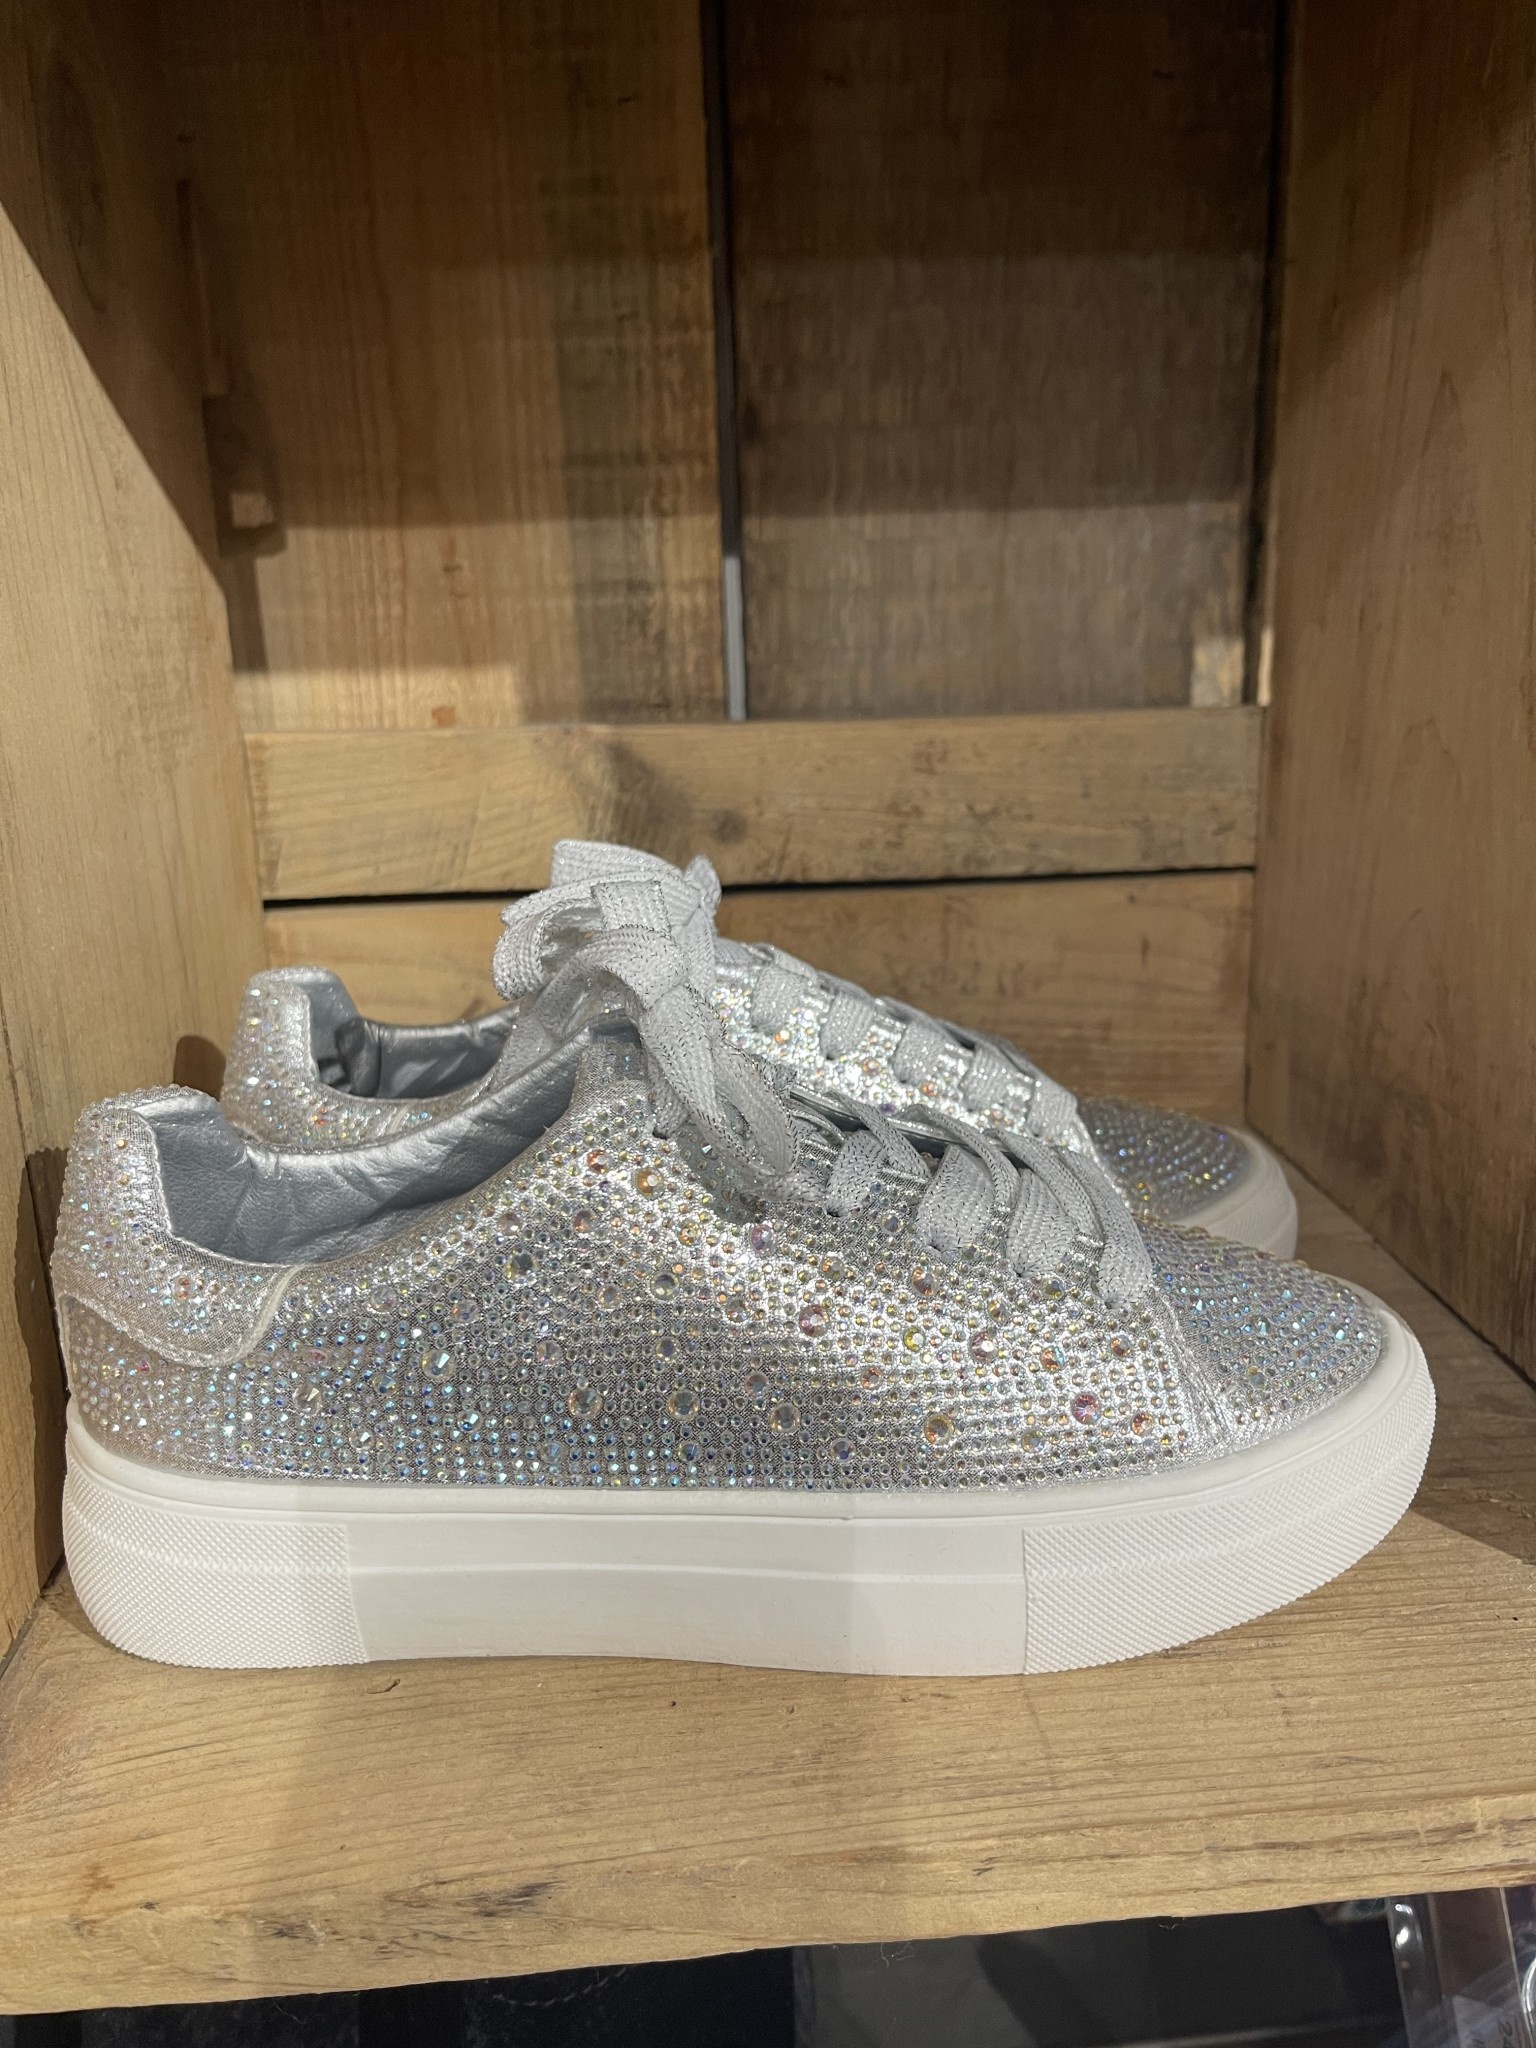 Silver Sparkle Tennis Shoes with Laces - Elements Unleashed